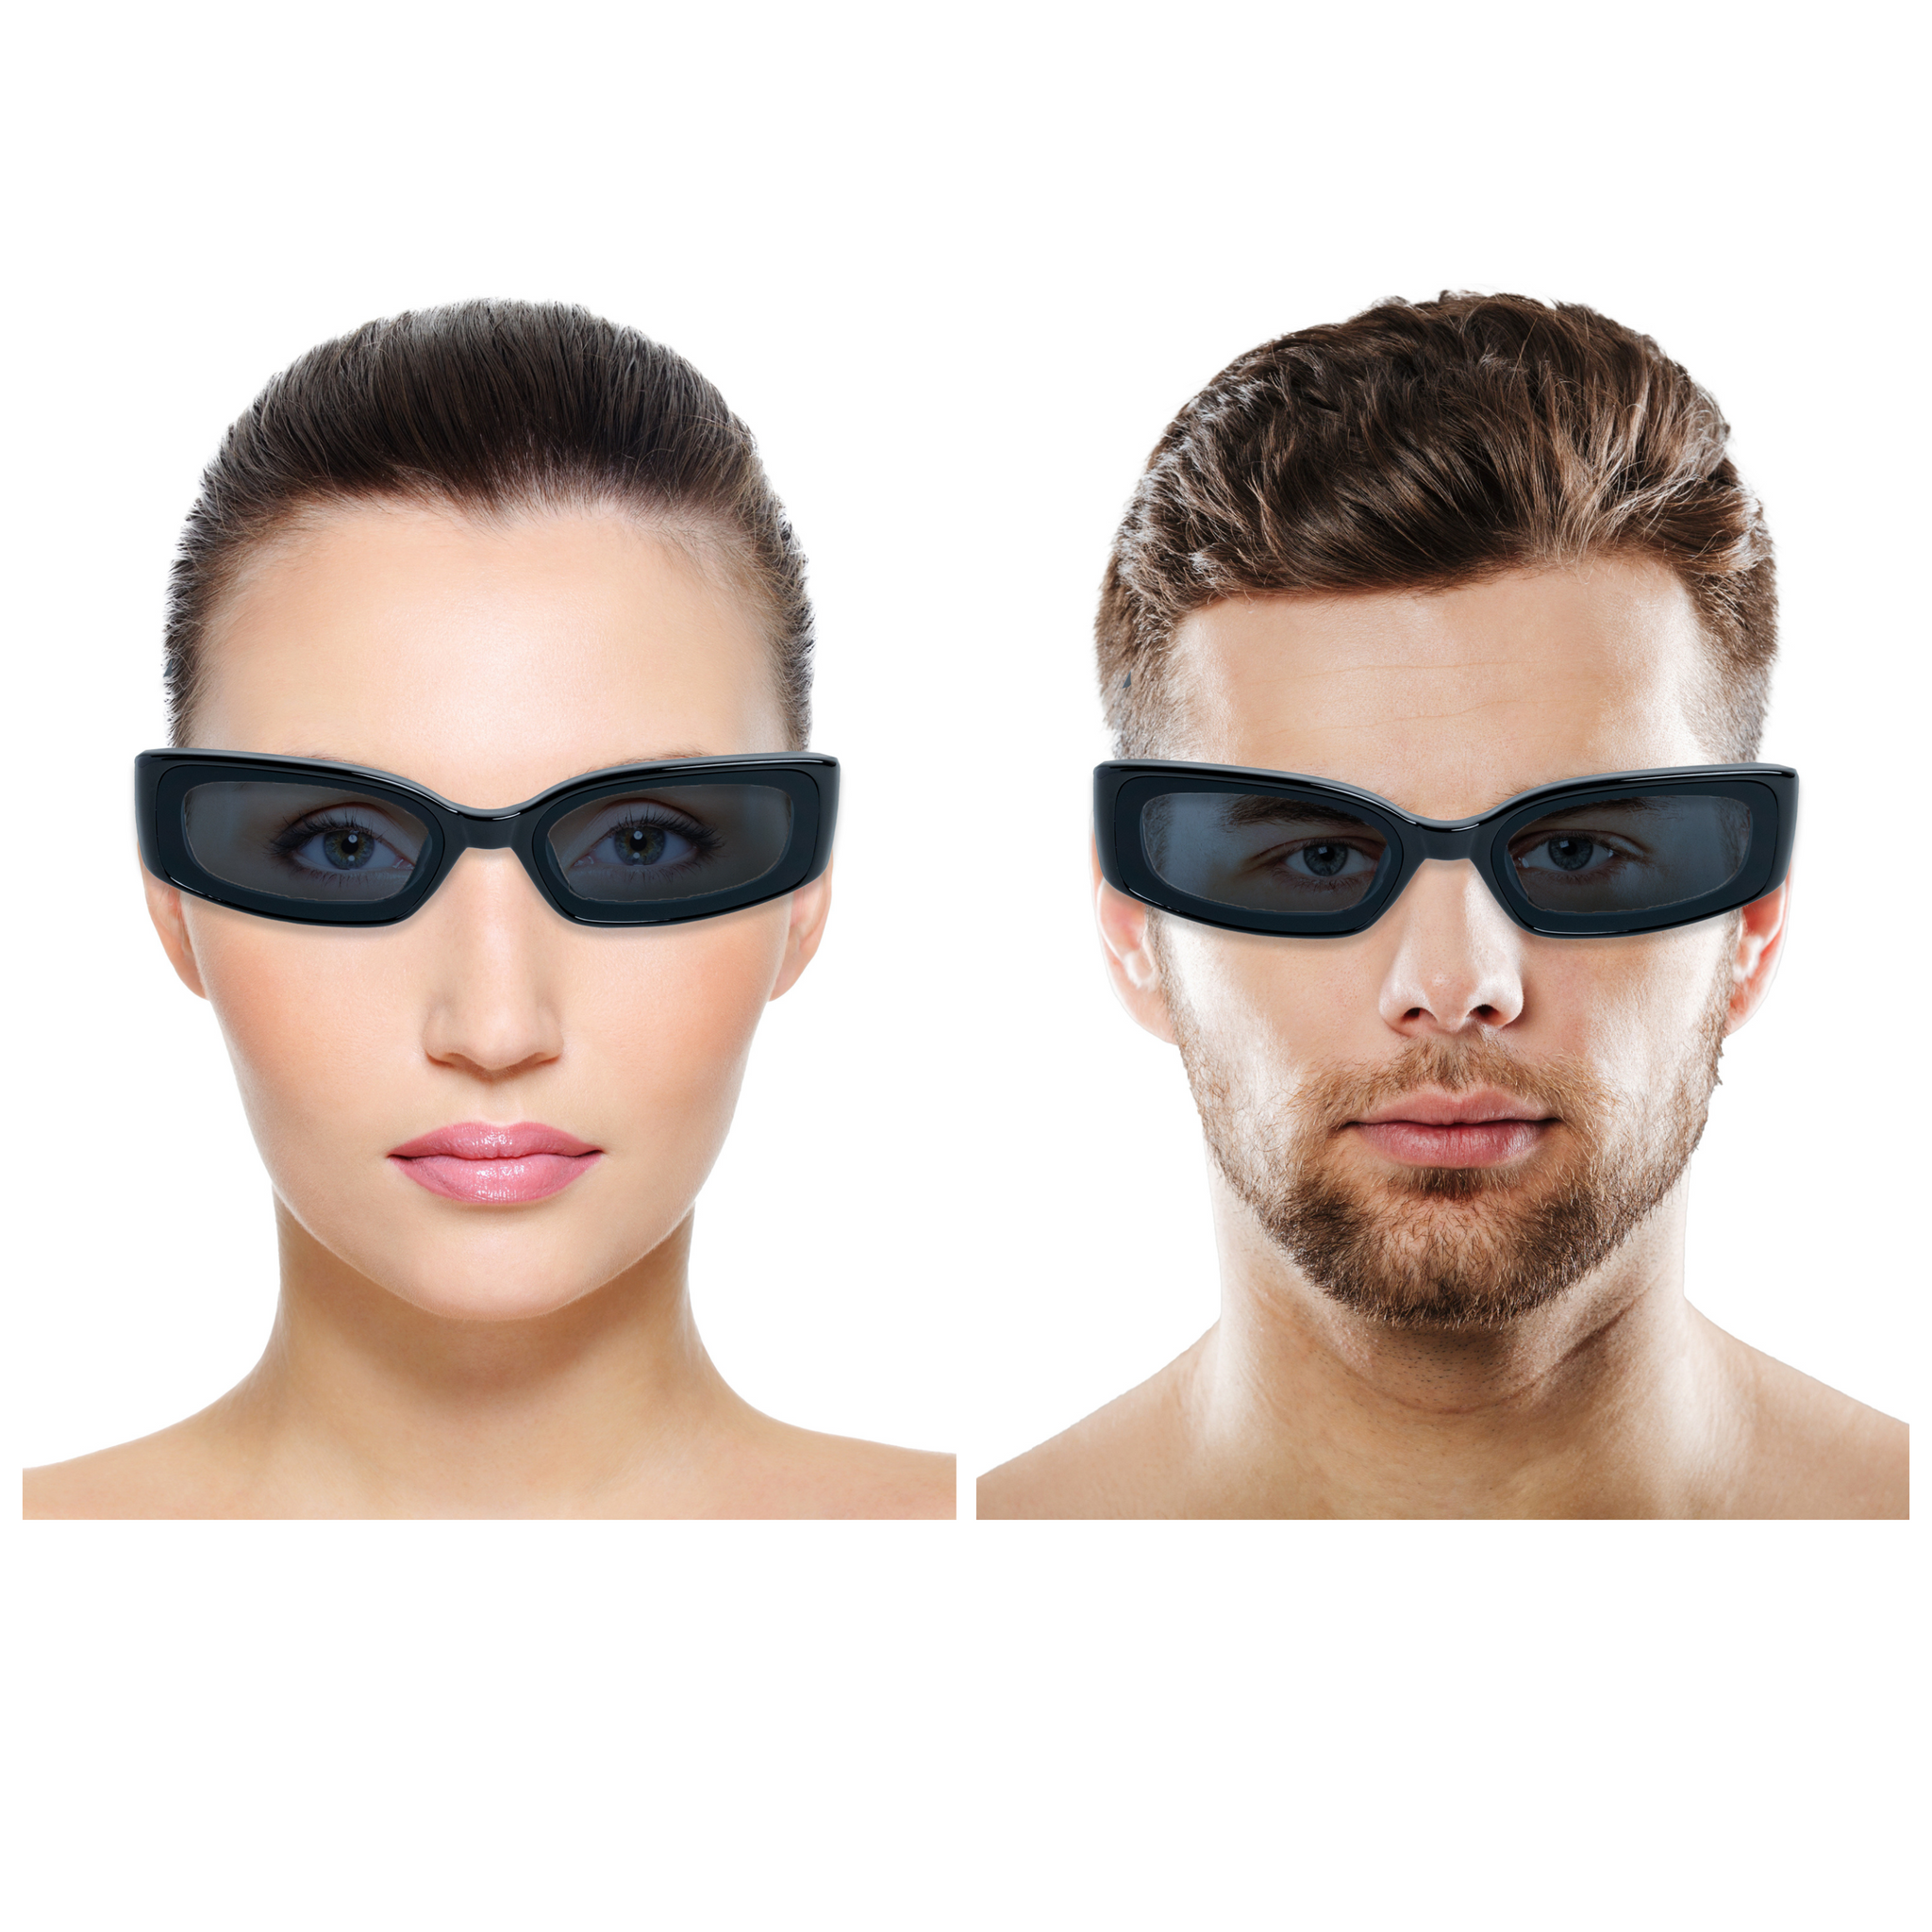 Chokore Rectangular UV-400 Protected Sunglasses (Black)